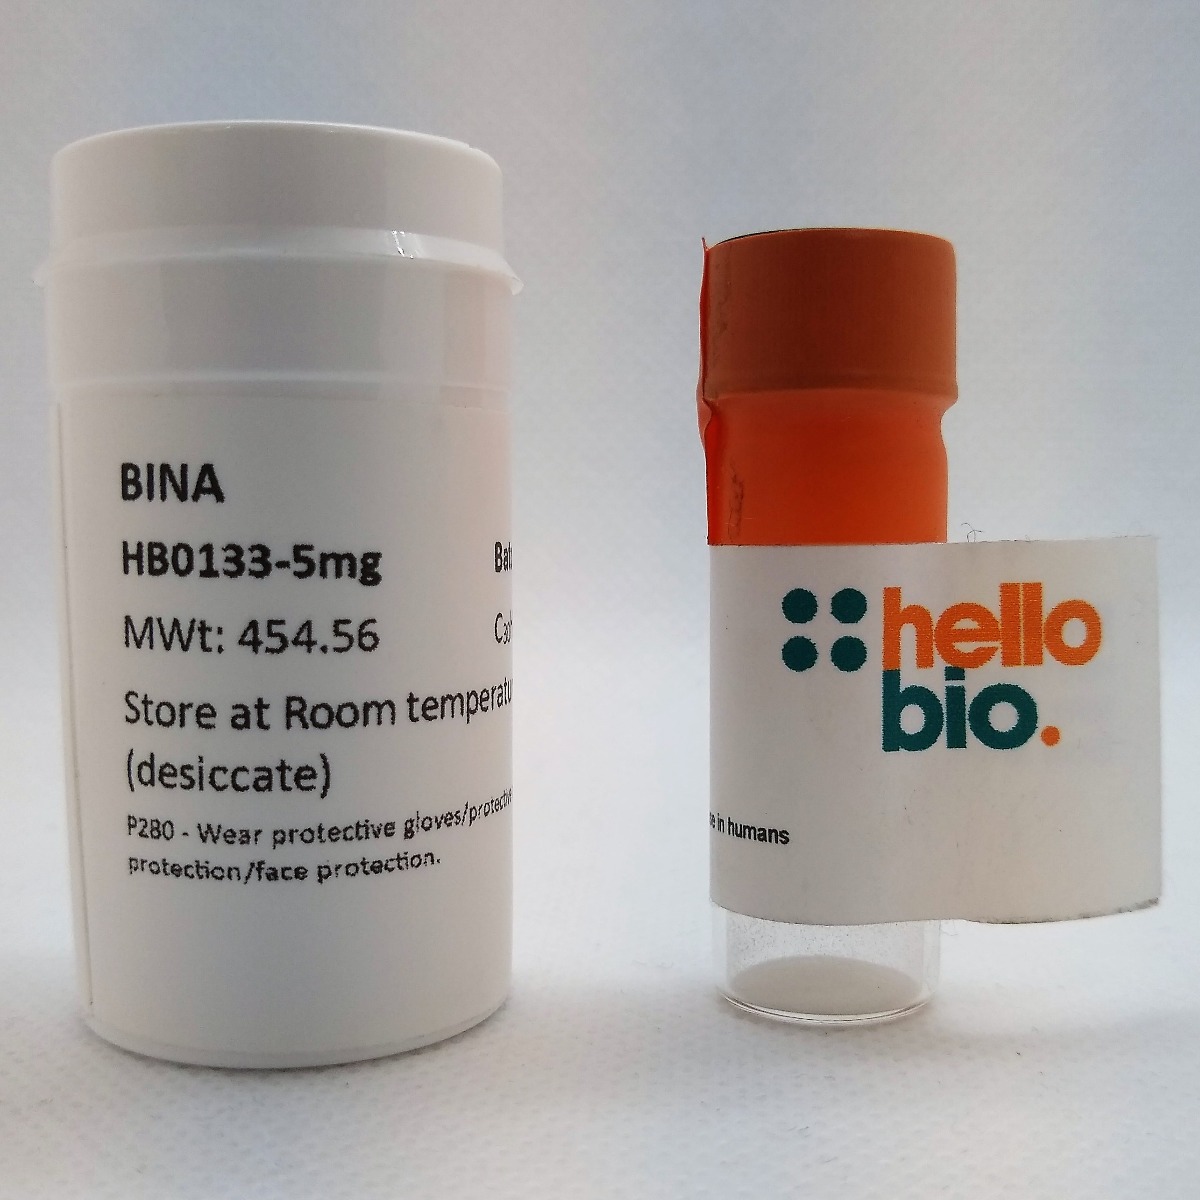 BINA product vial image | Hello Bio